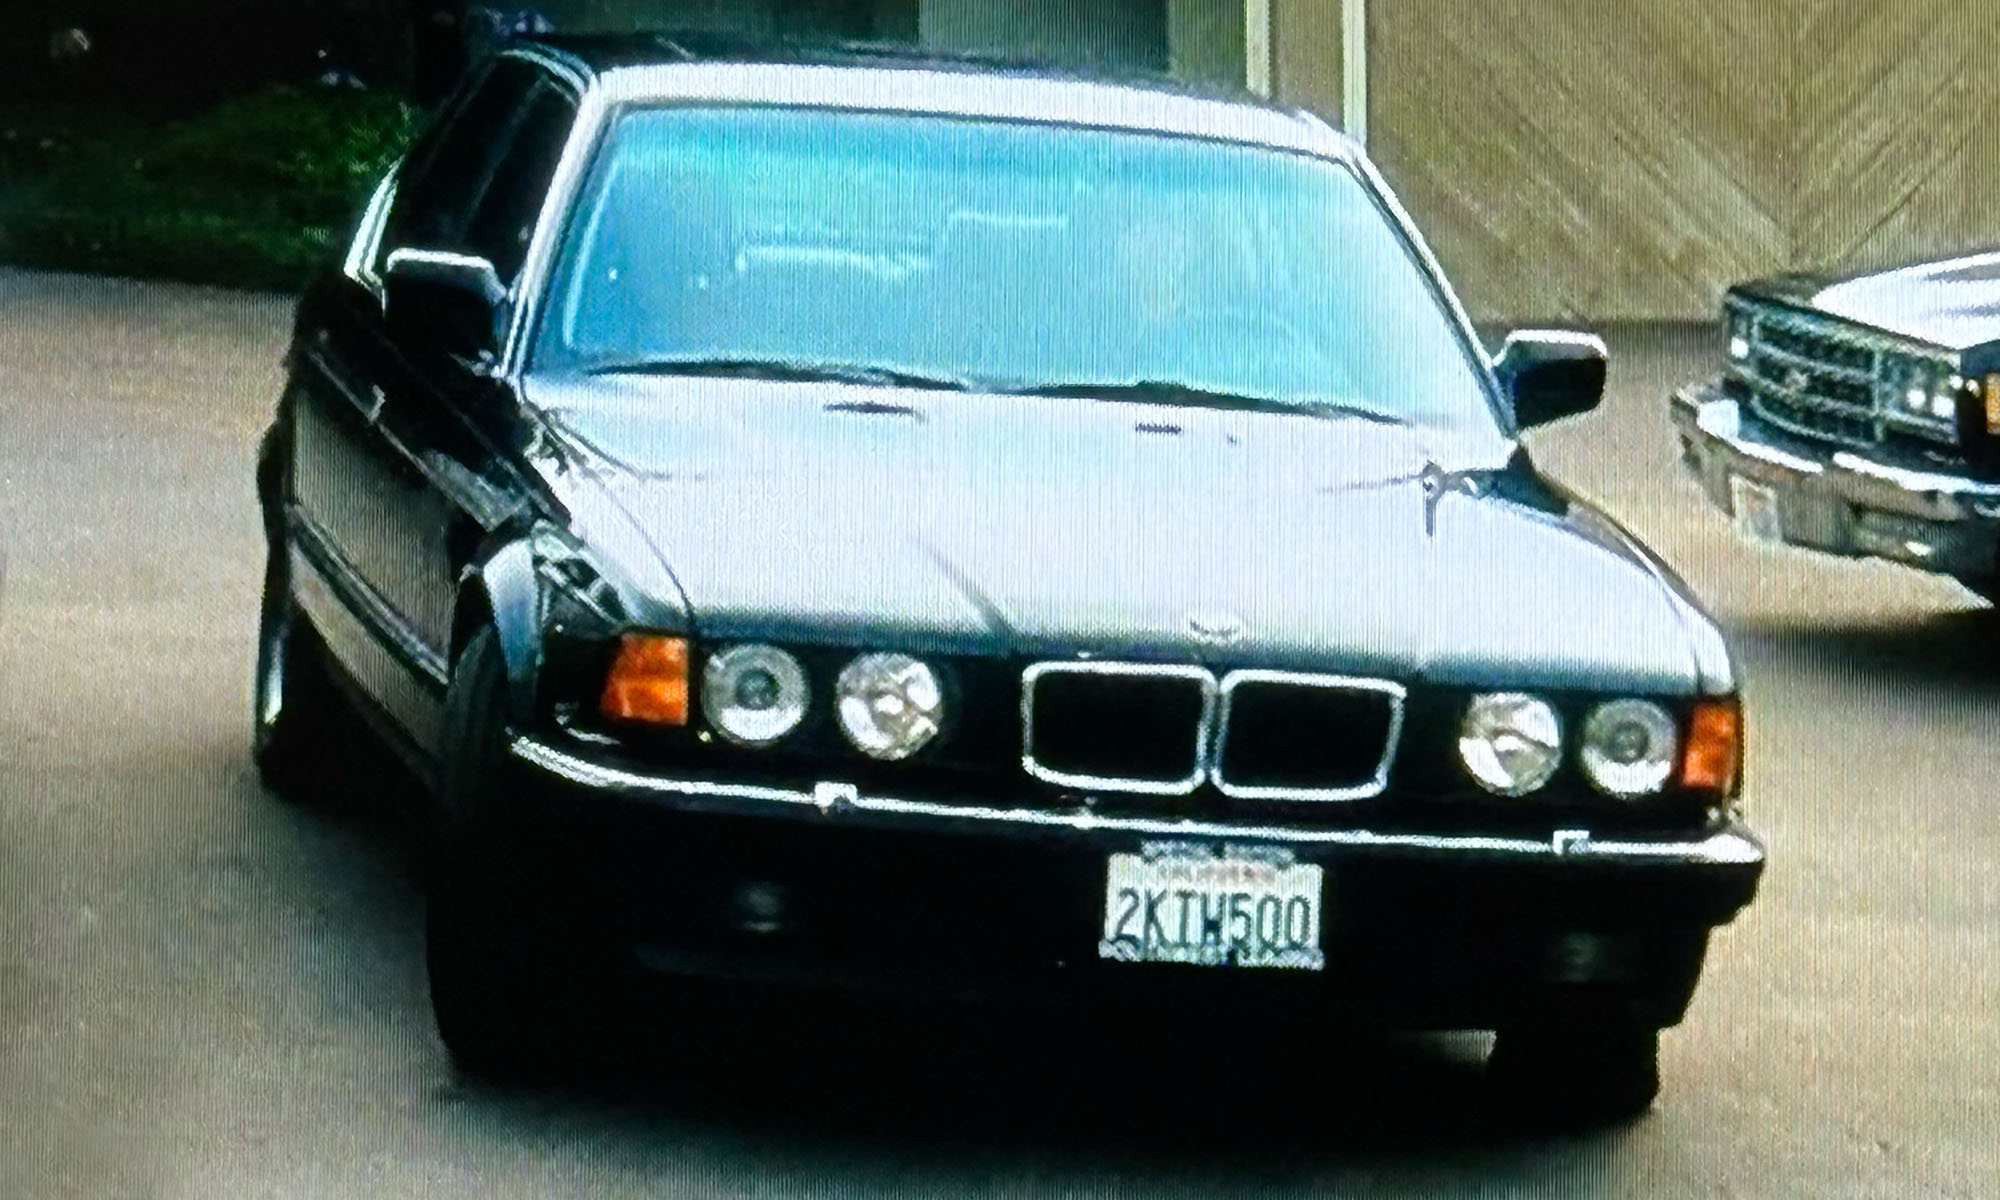 BMW740